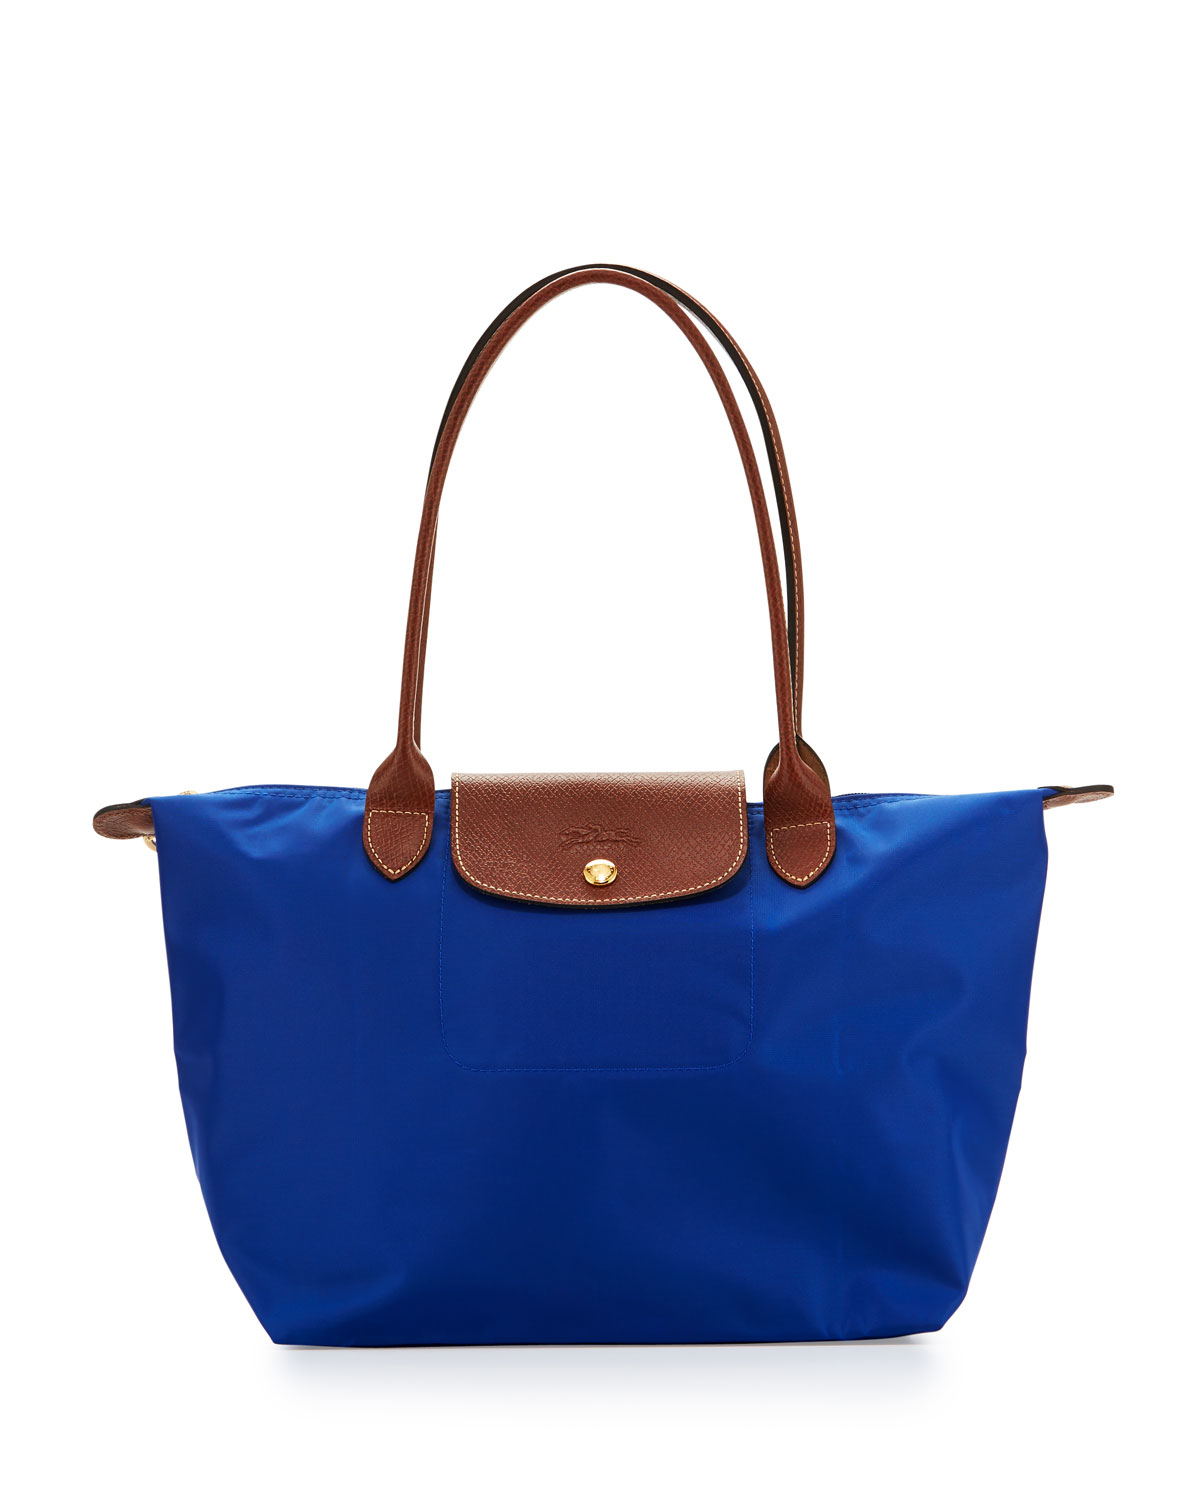 Lyst - Longchamp Le Pliage Medium Shoulder Tote Bag in Blue